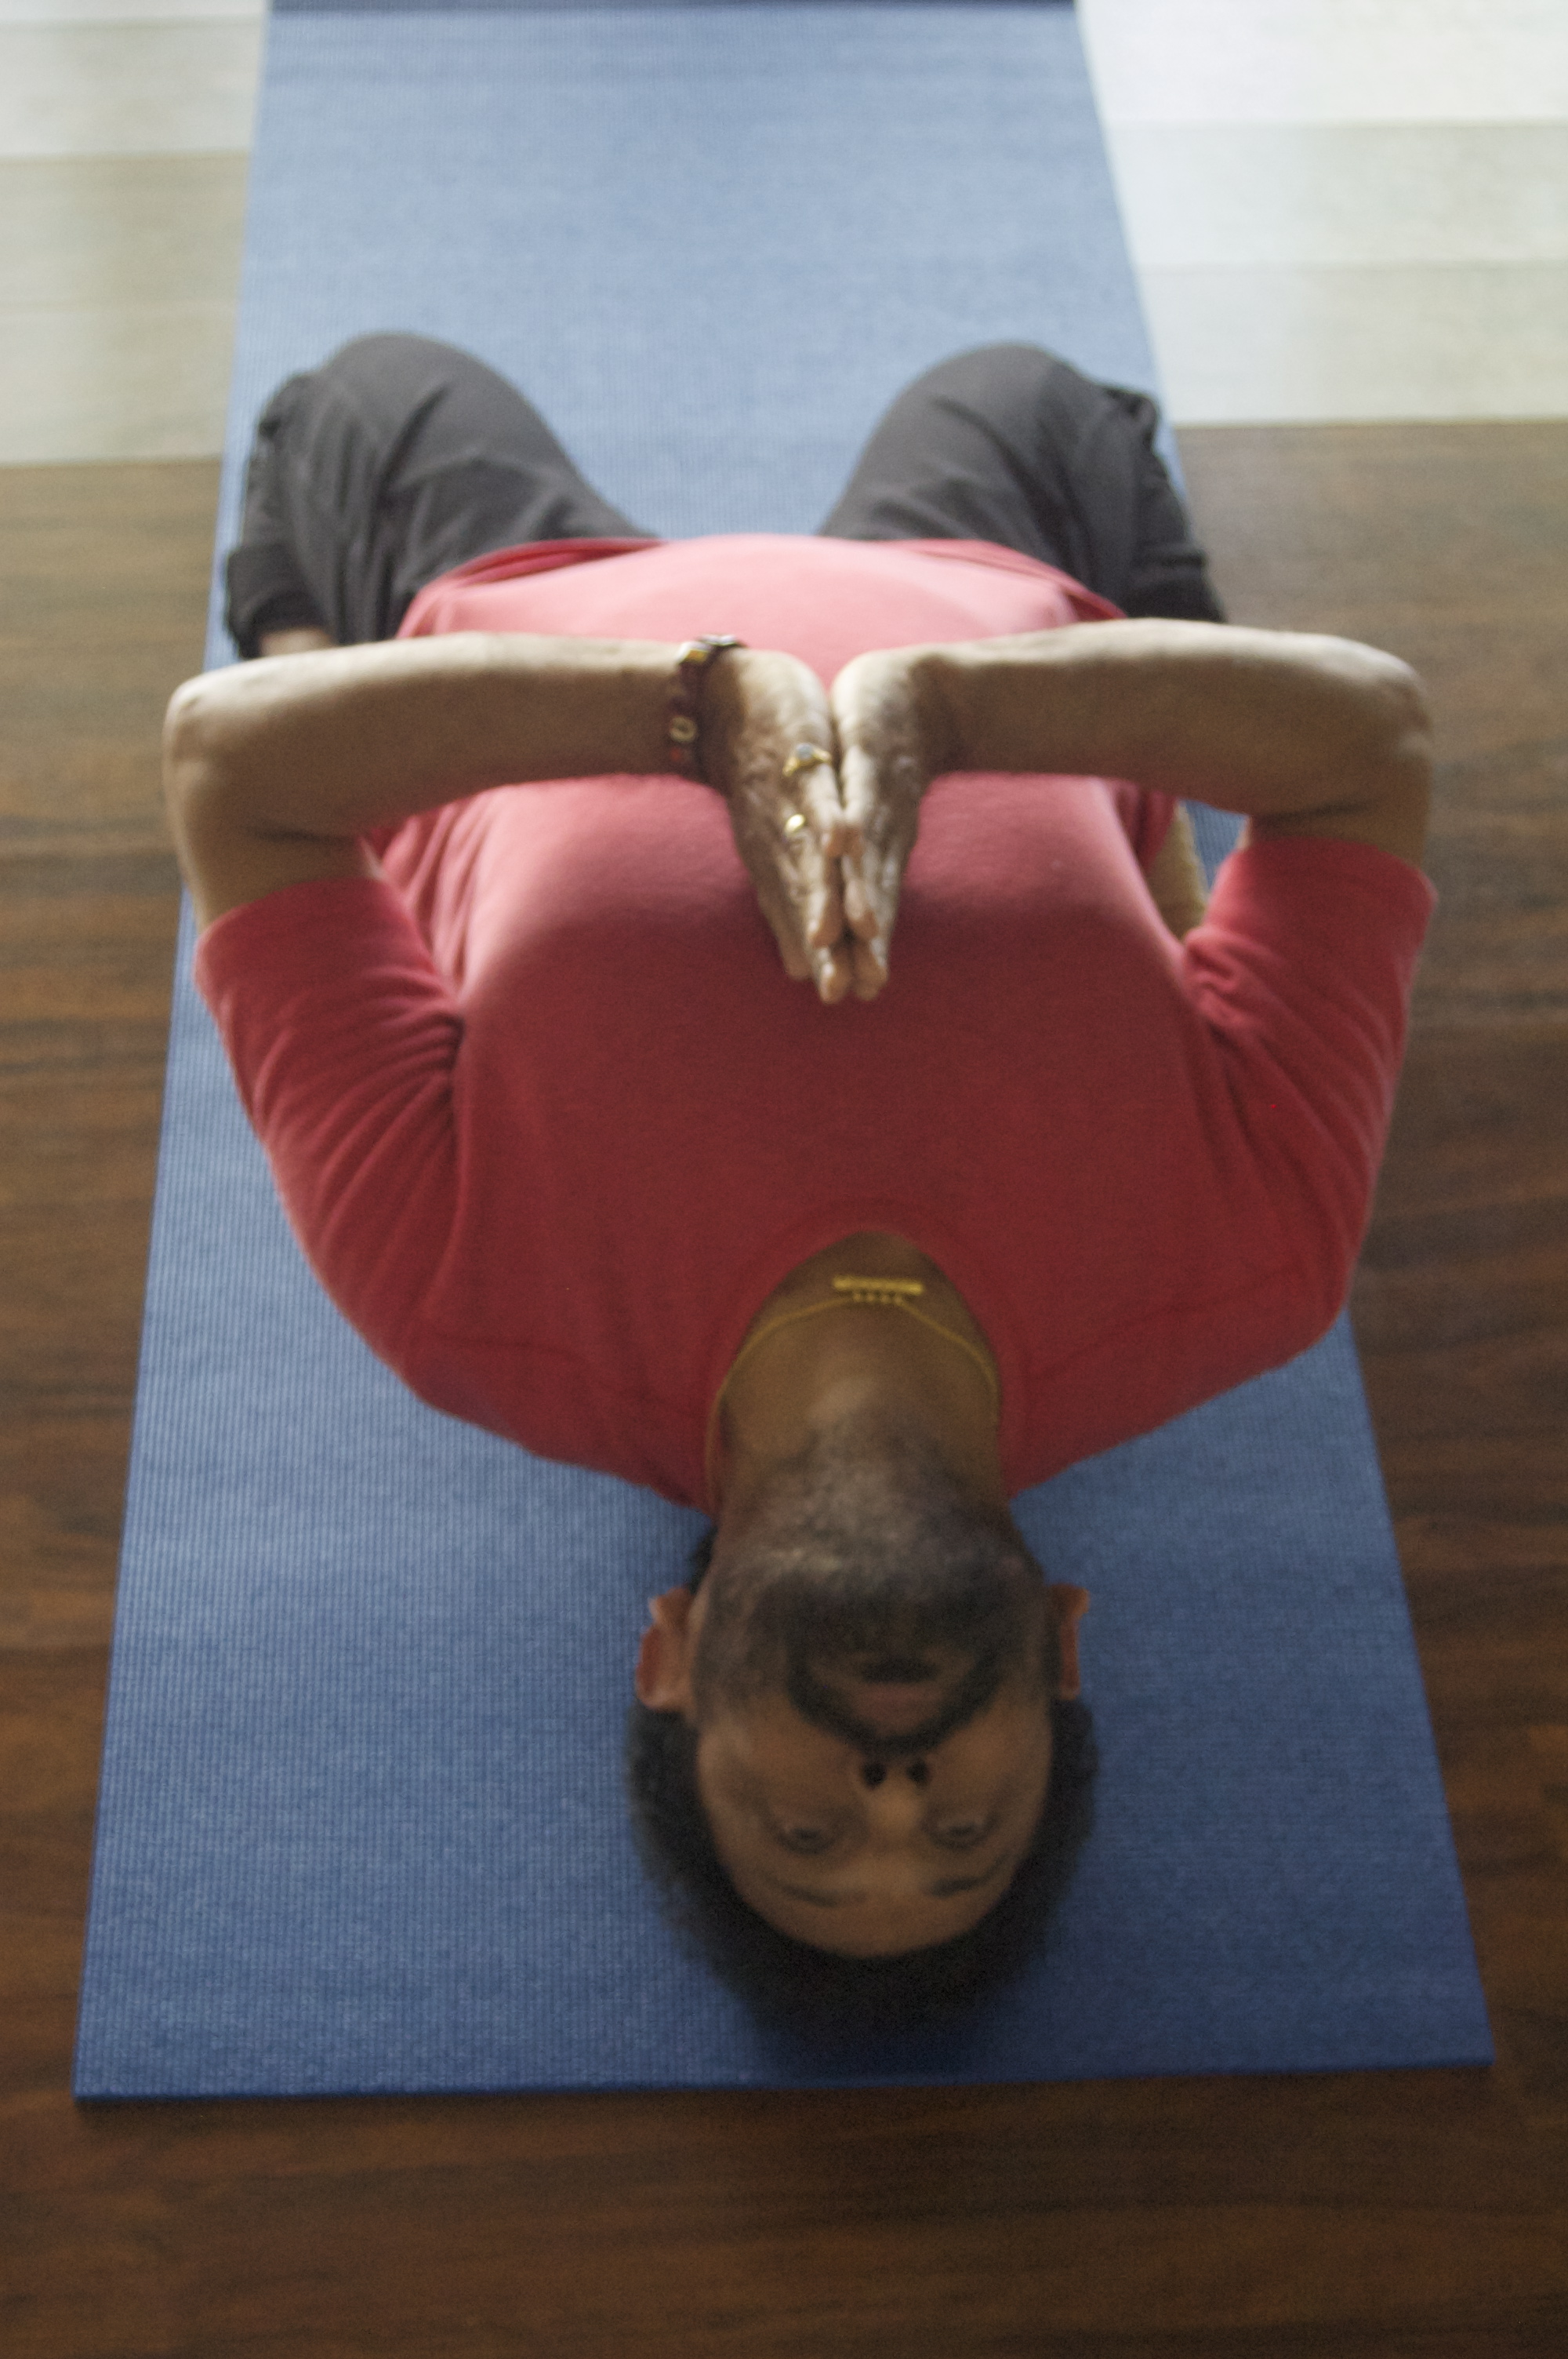 6 yoga poses for uterus care | HealthShots